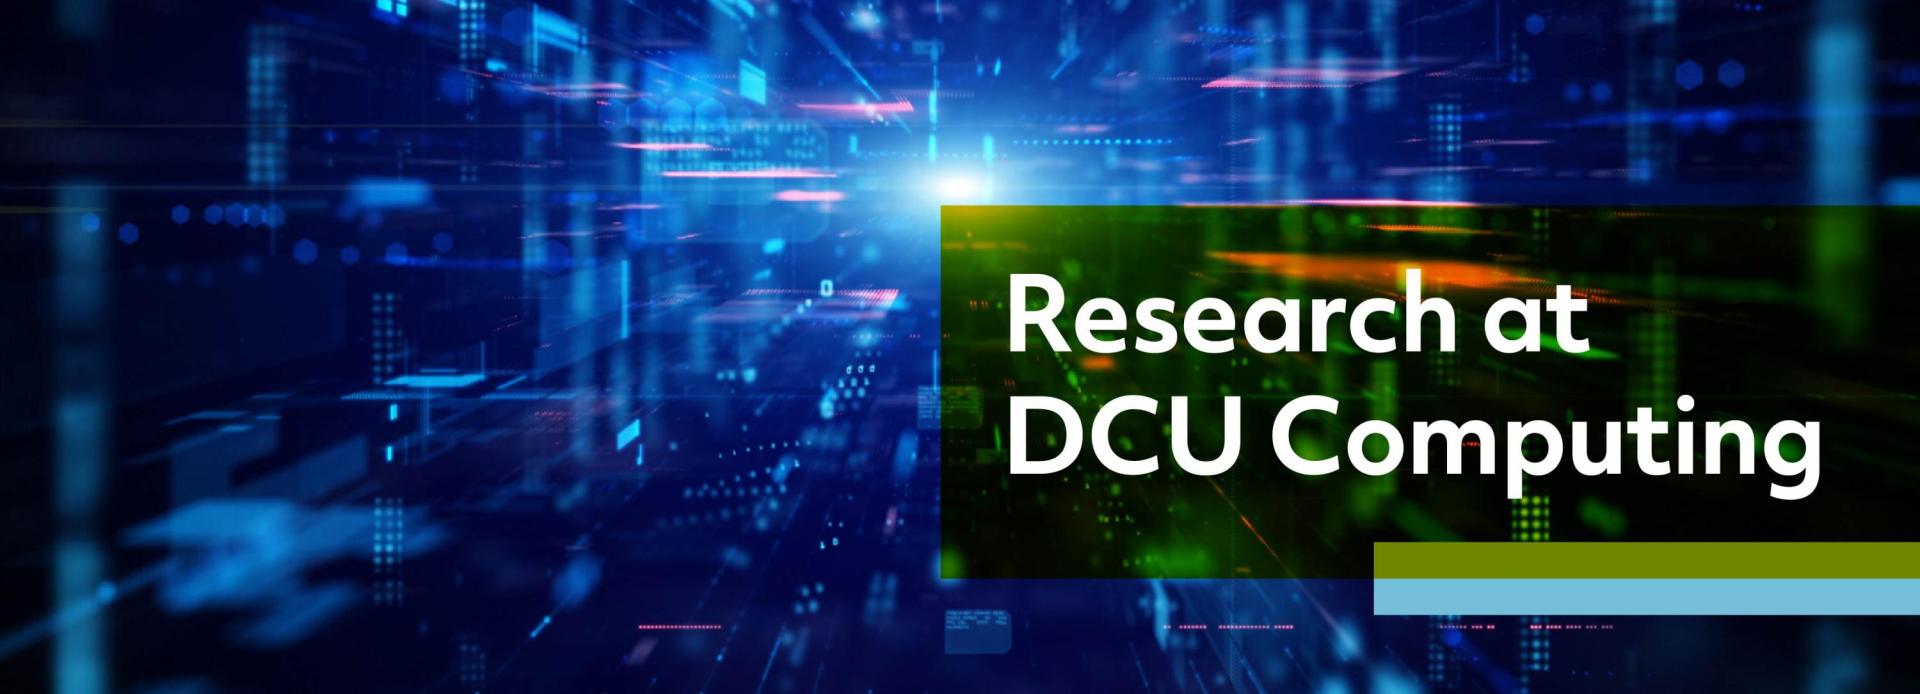 Research at DCU Computing